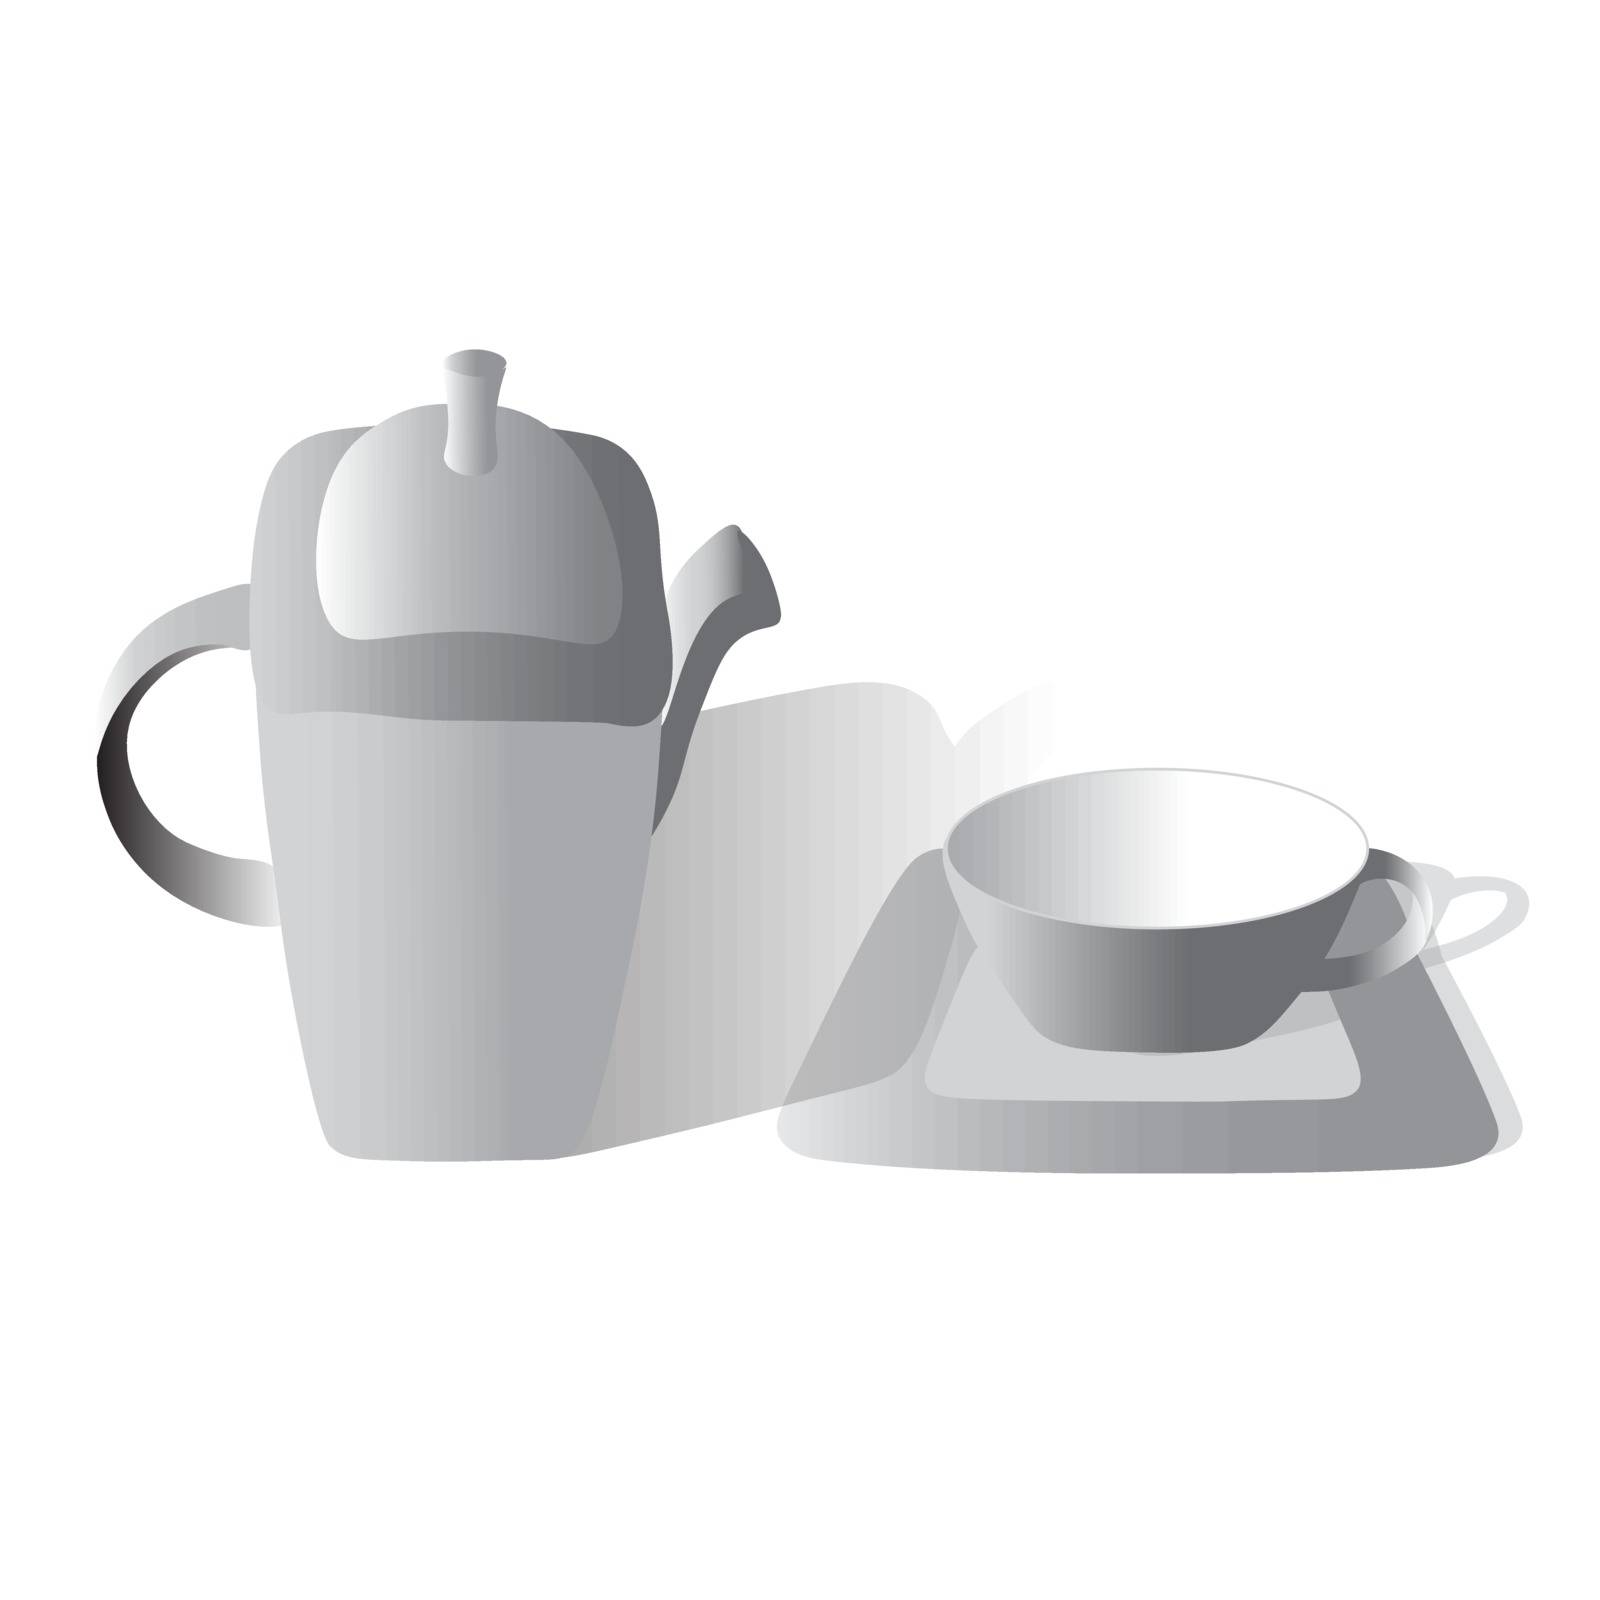    Tea set gray on a white background, Vector design.